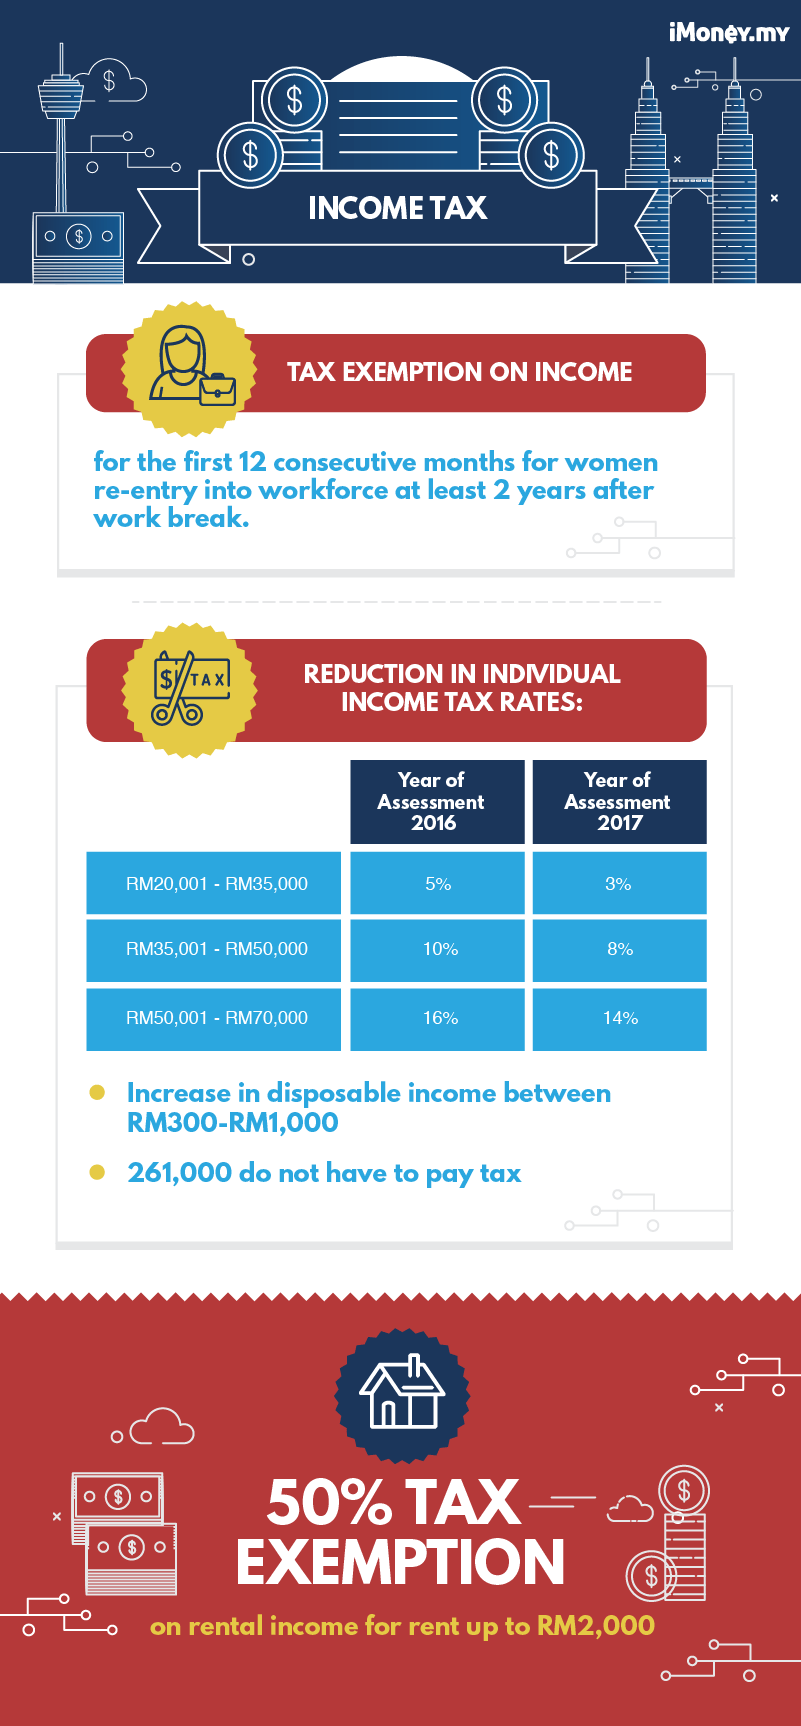 malaysia budget 2018 income tax